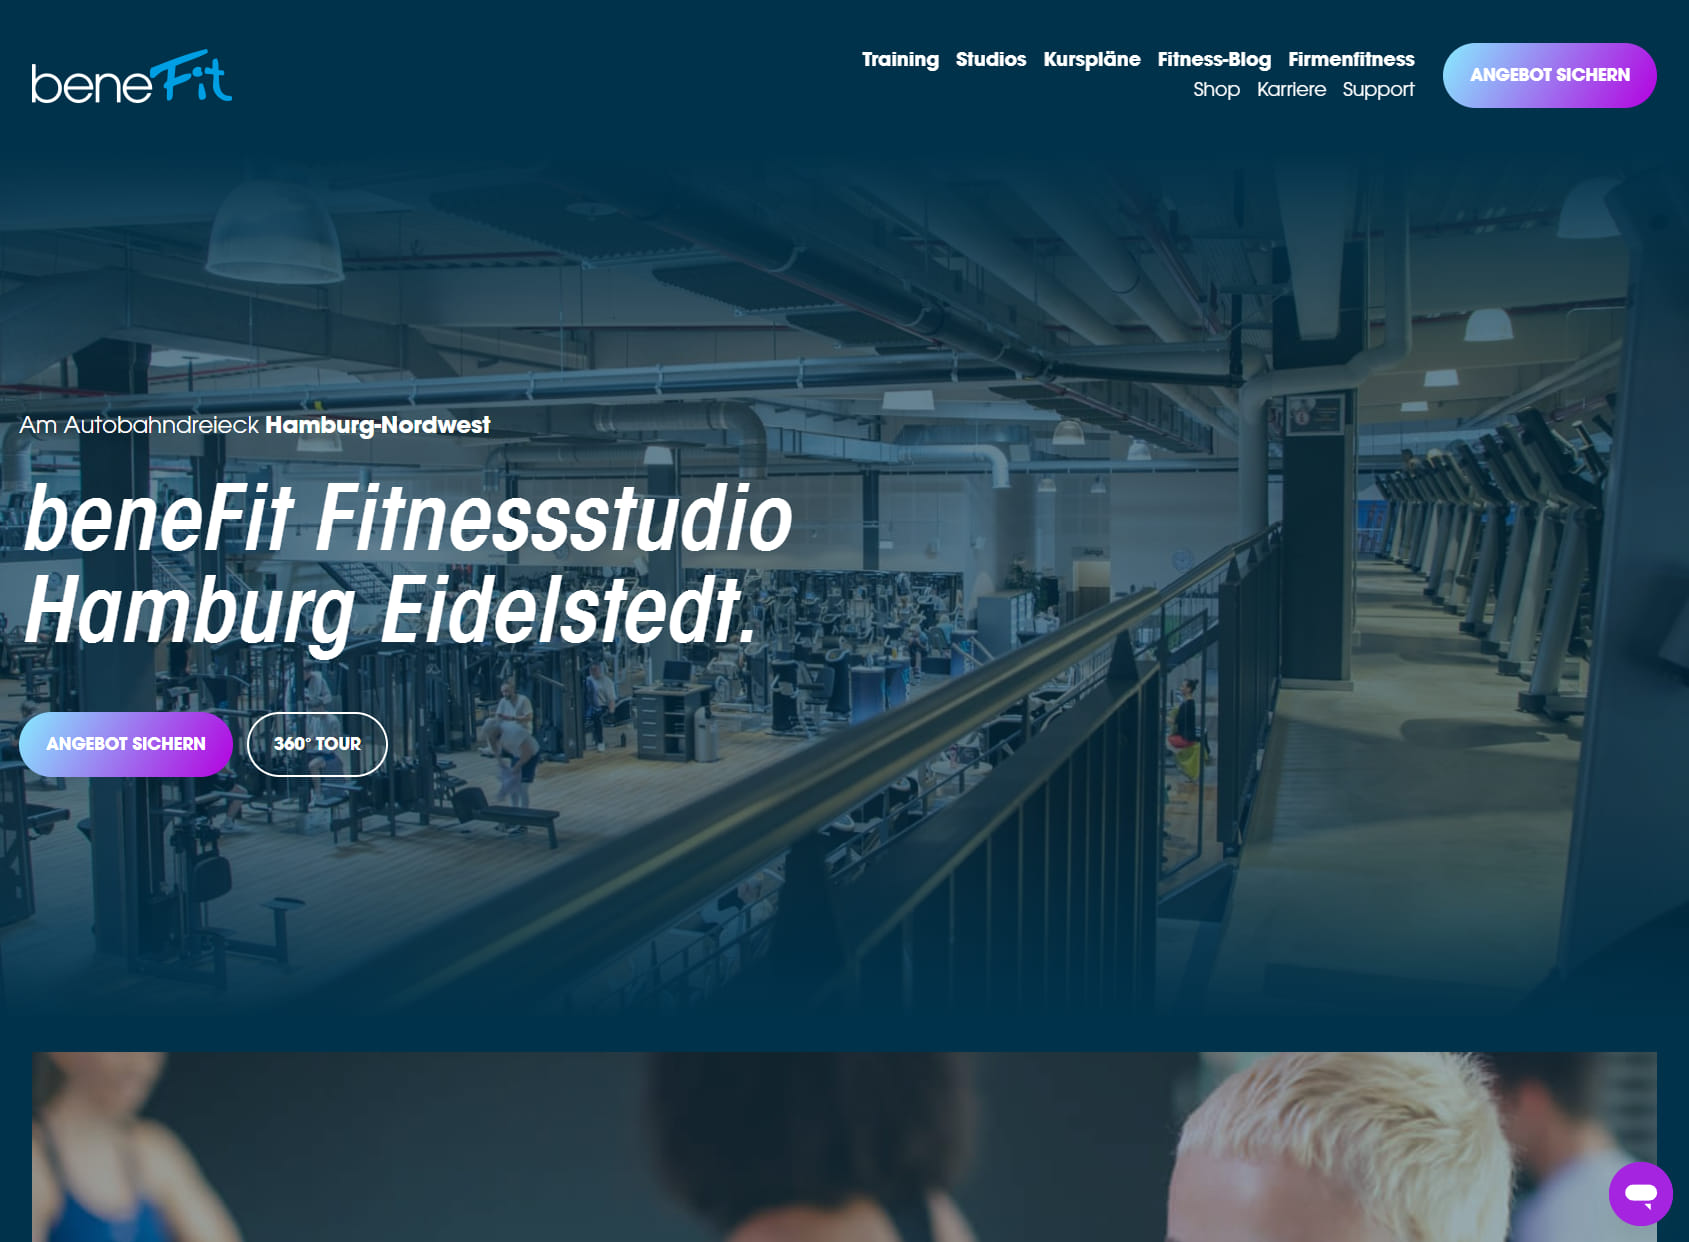 beneFit Fitnessstudio Hamburg (Eidelstedt)